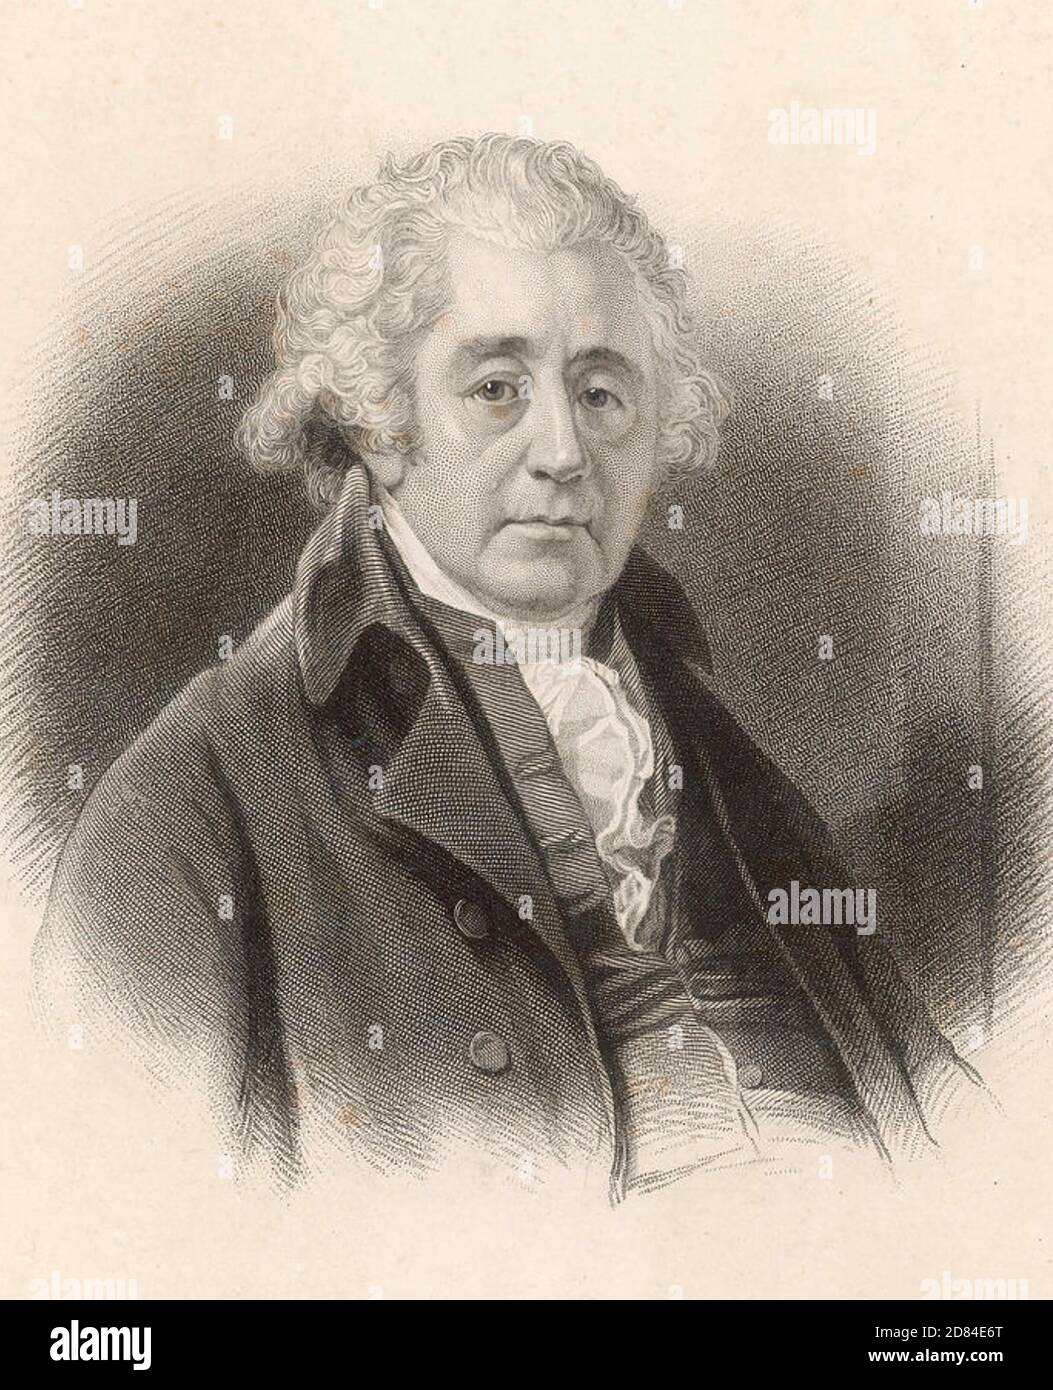 MATTHEW BOULTON (1728-1809) Inglés ingeniero, fabricante, alrededor de 1792 Foto de stock